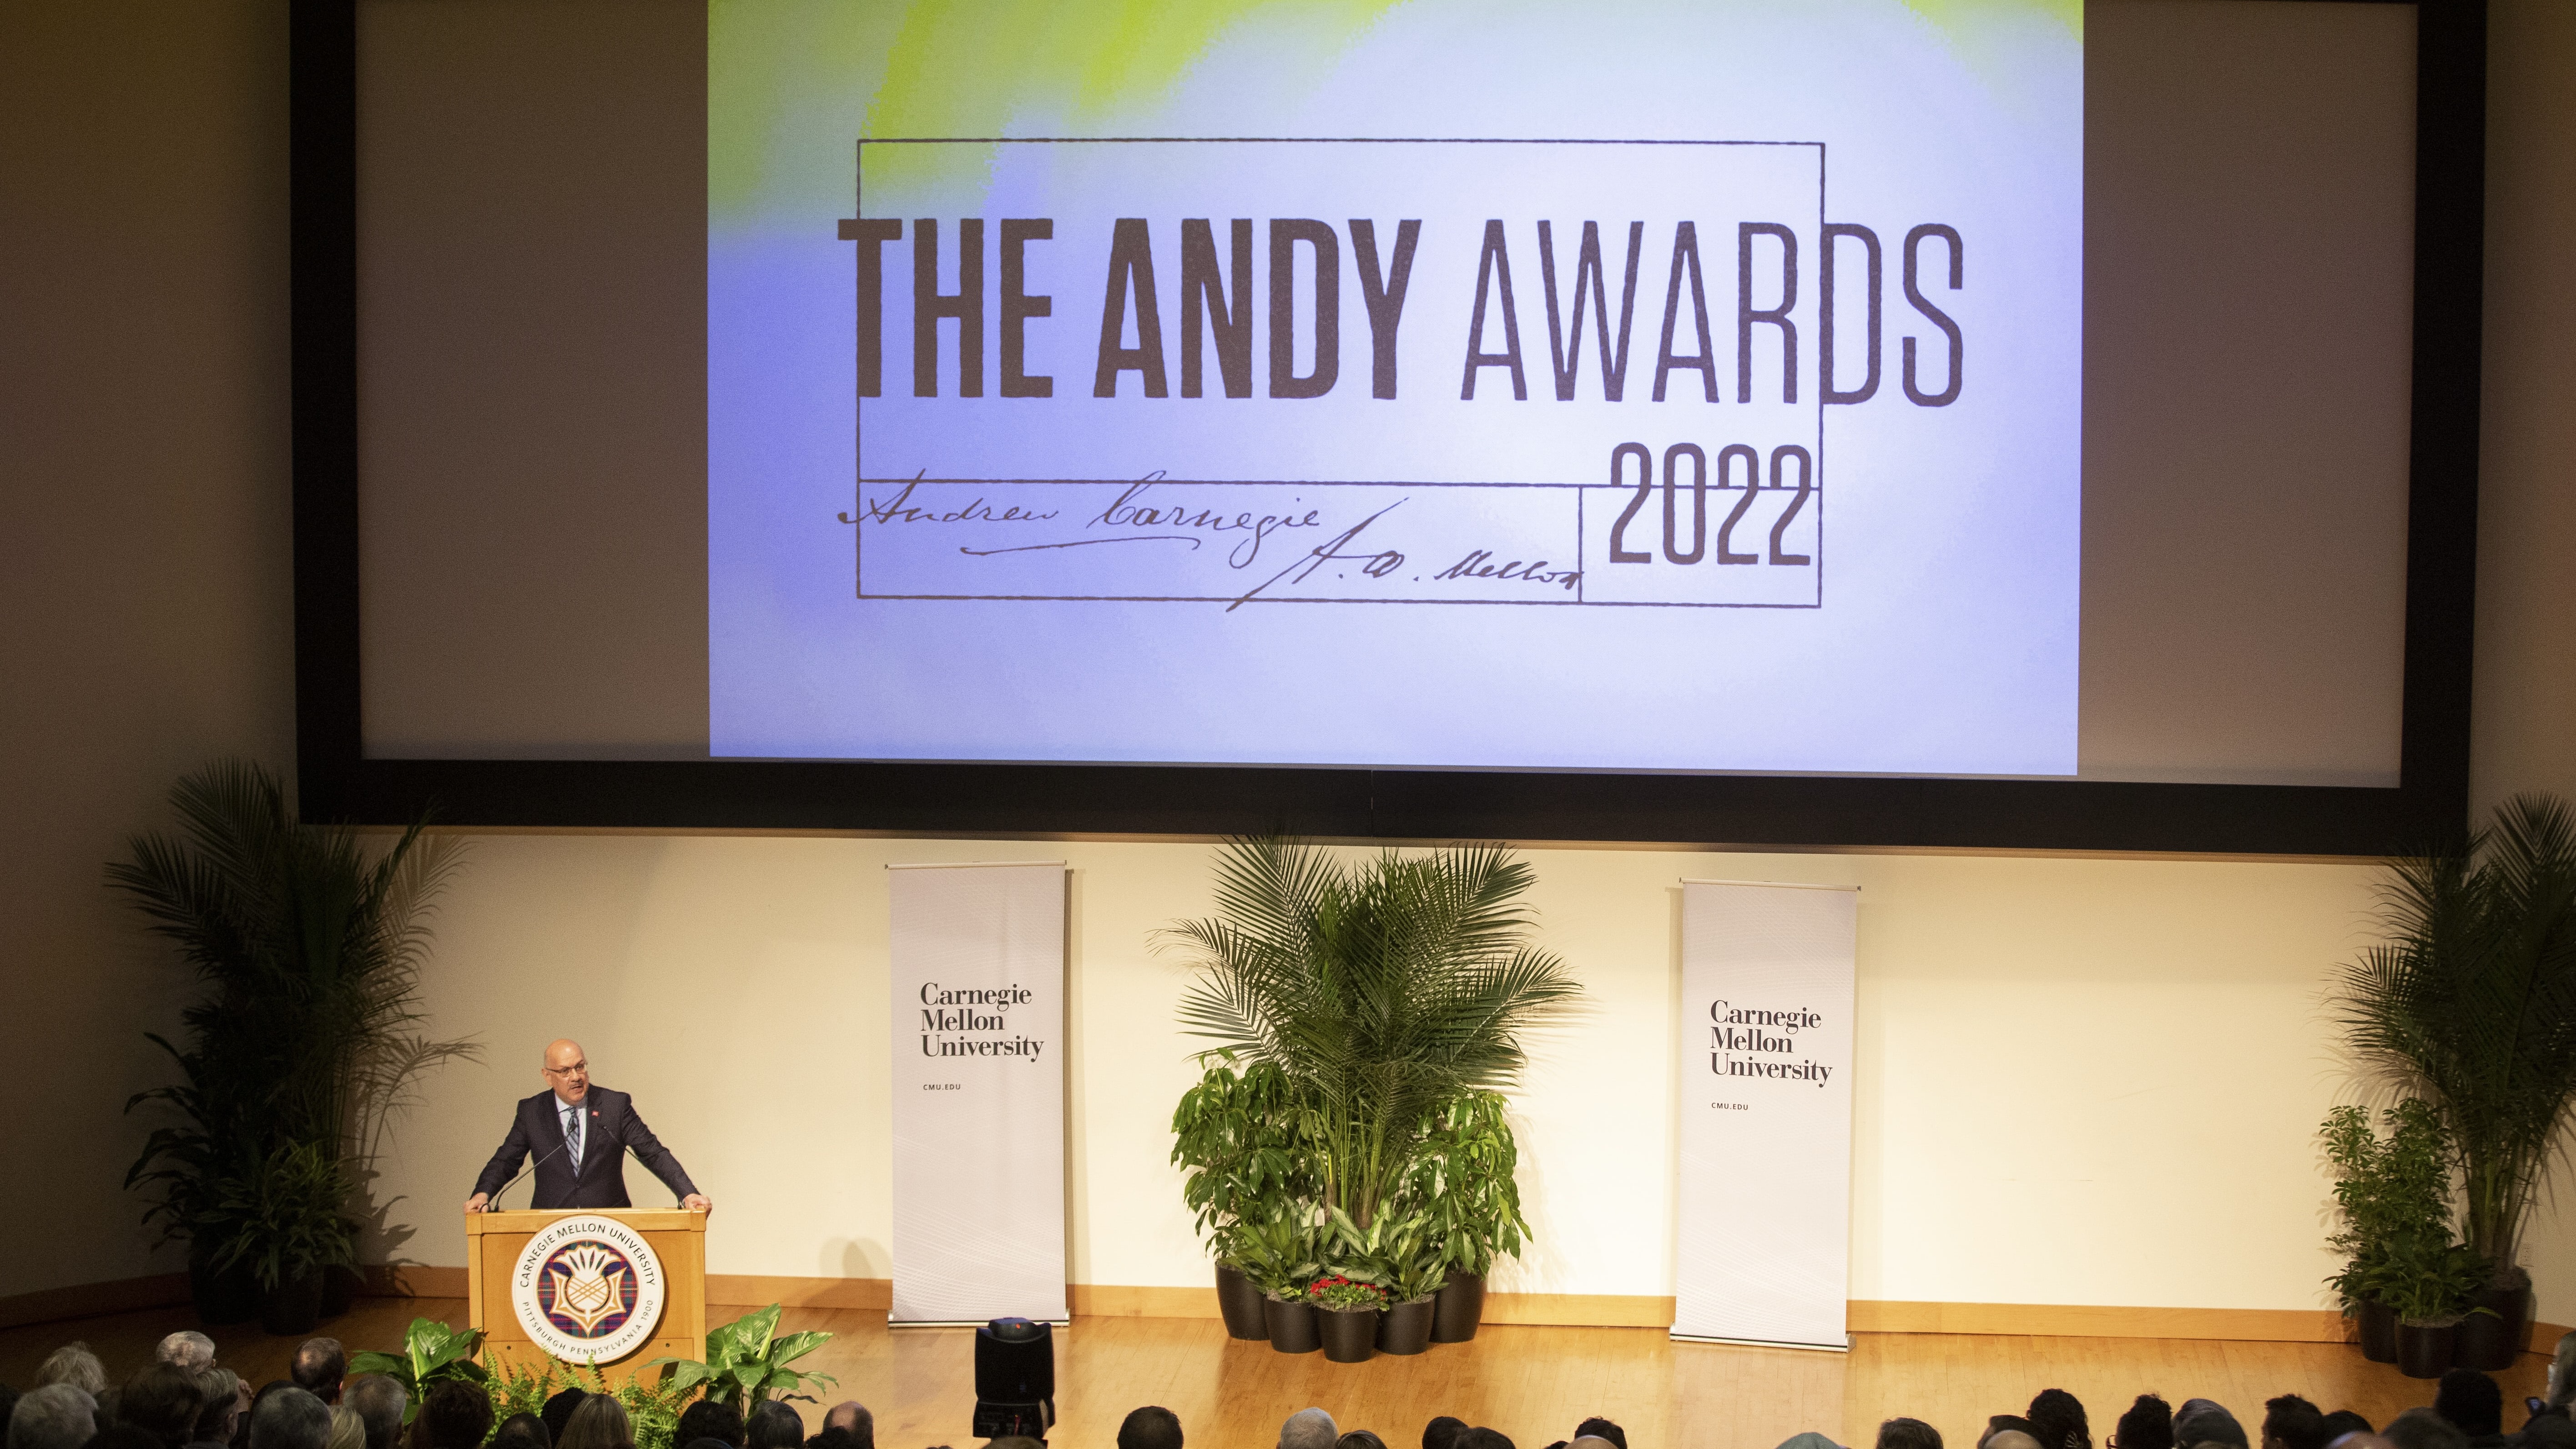 andy-awards-2022-farnam-podium-screen.jpg